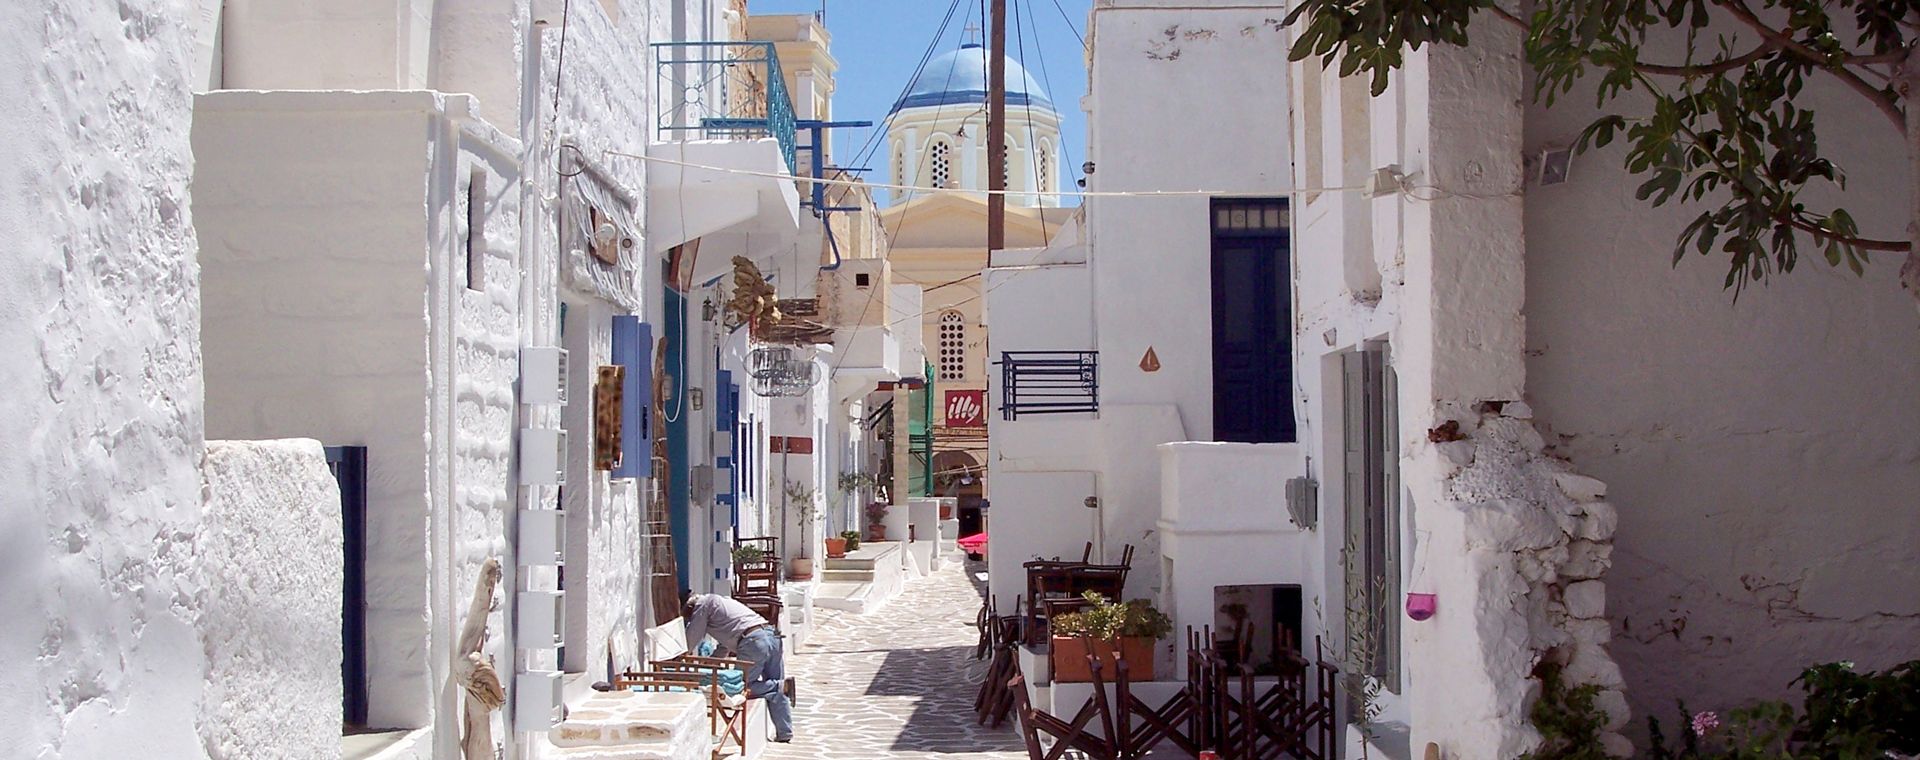 Ruelle de Chorio sur l'île de Kimolos, Cyclades